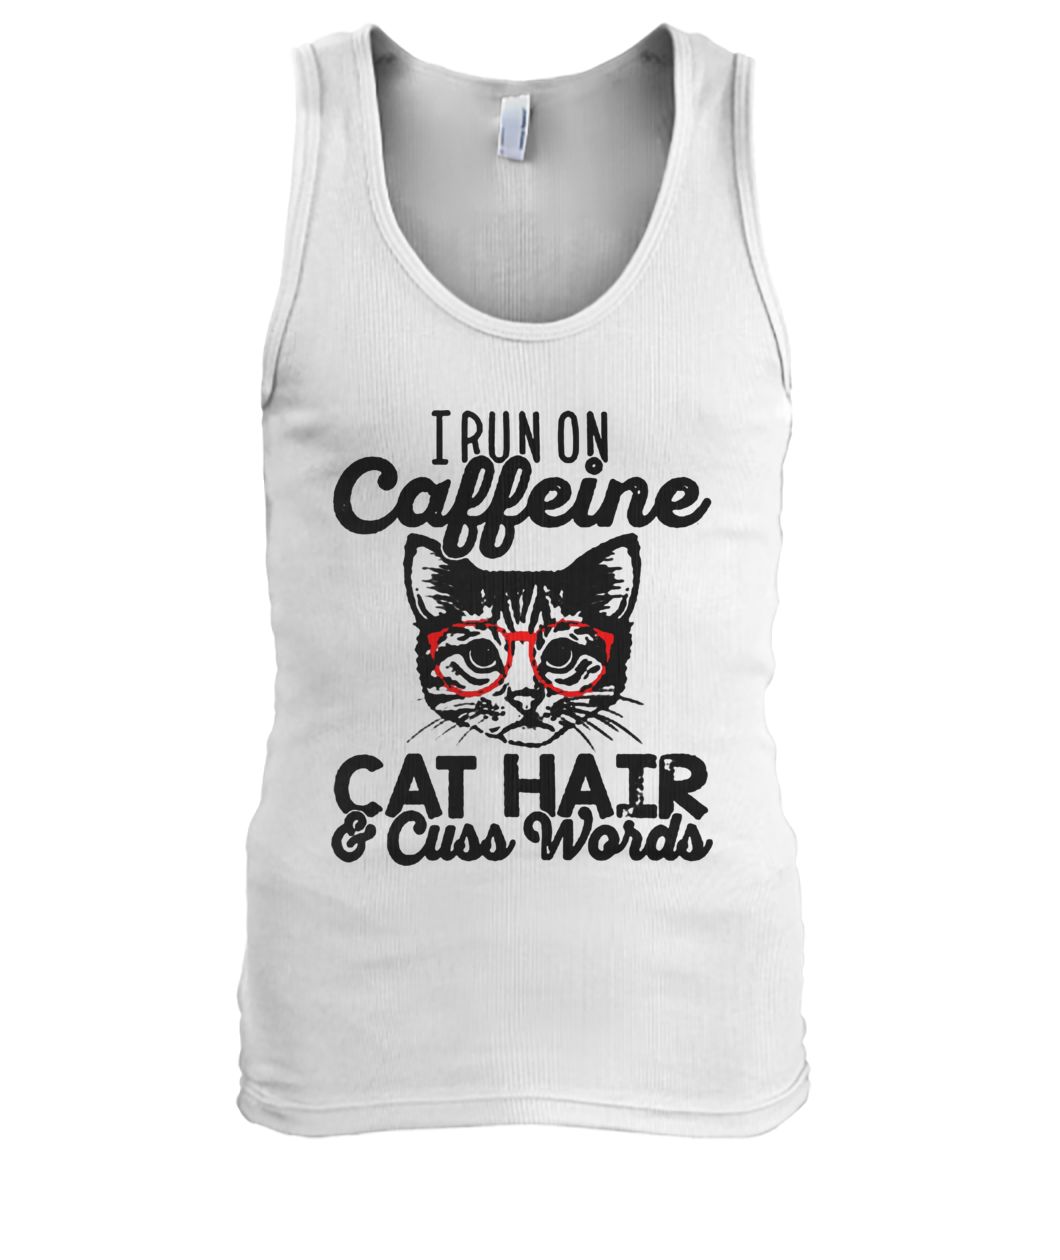 I run on caffeine cat hair and cuss words men's tank top